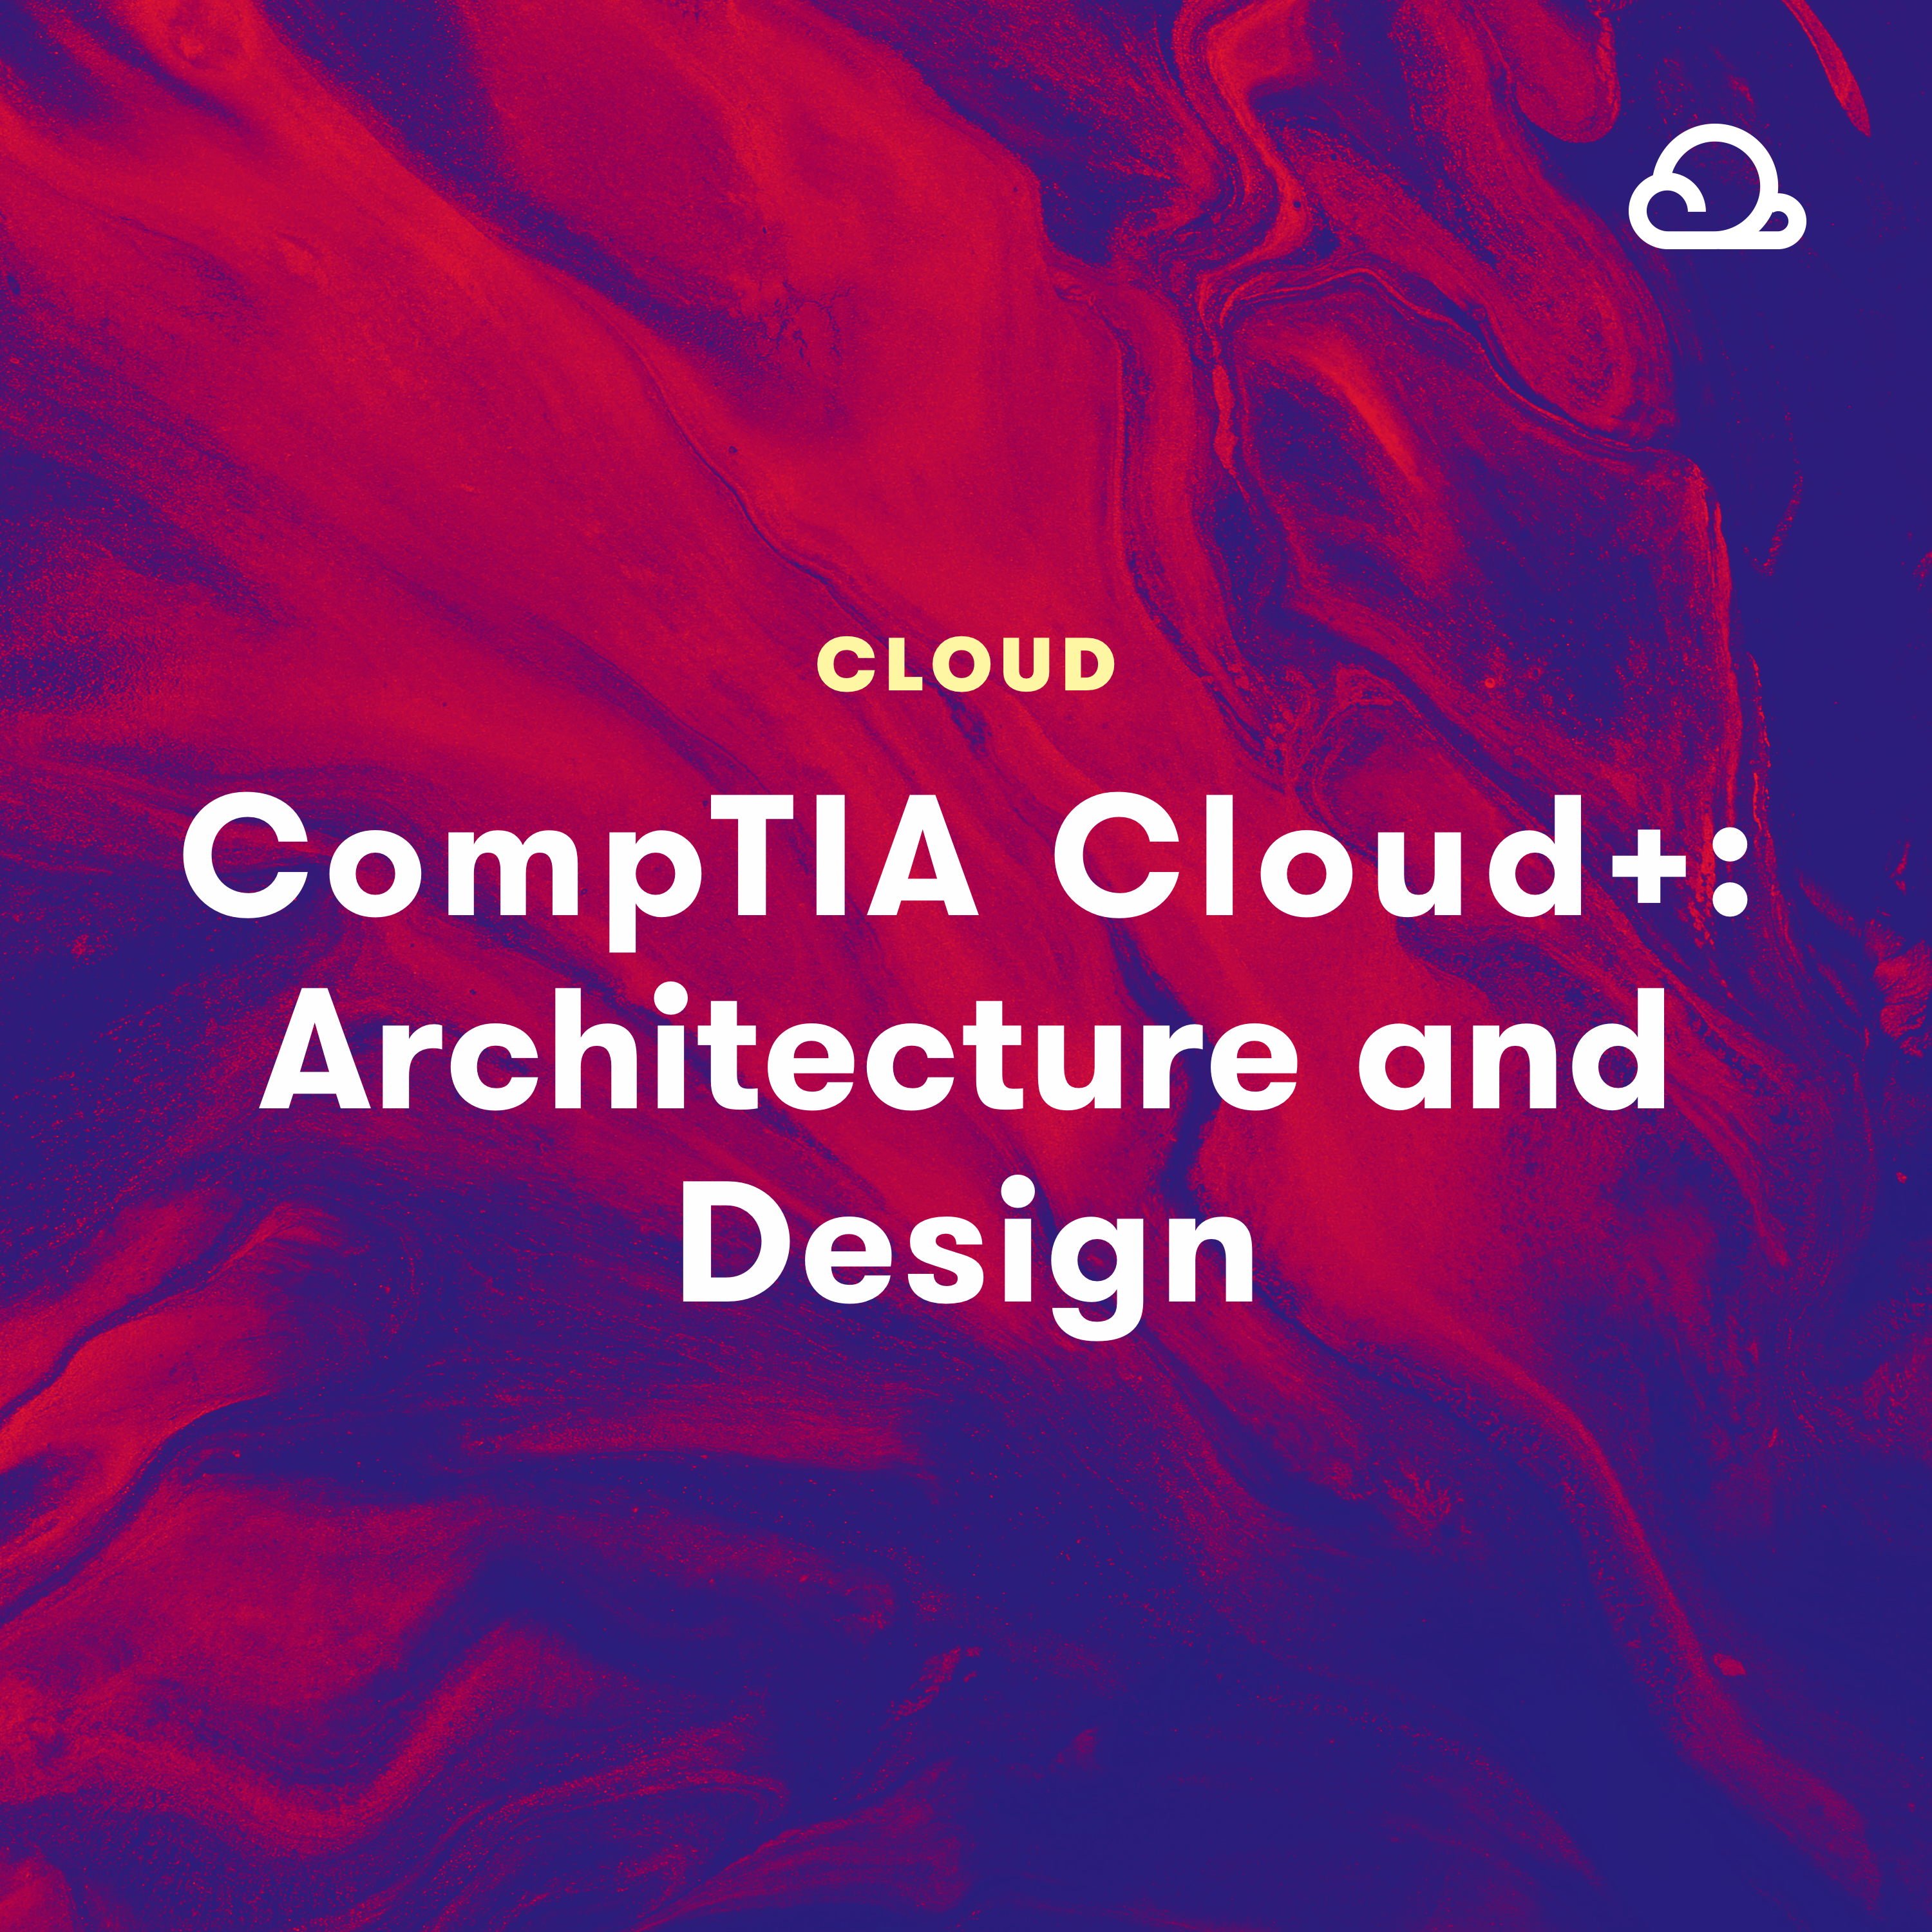 CompTIA Cloud : Cloud Architecture and Design